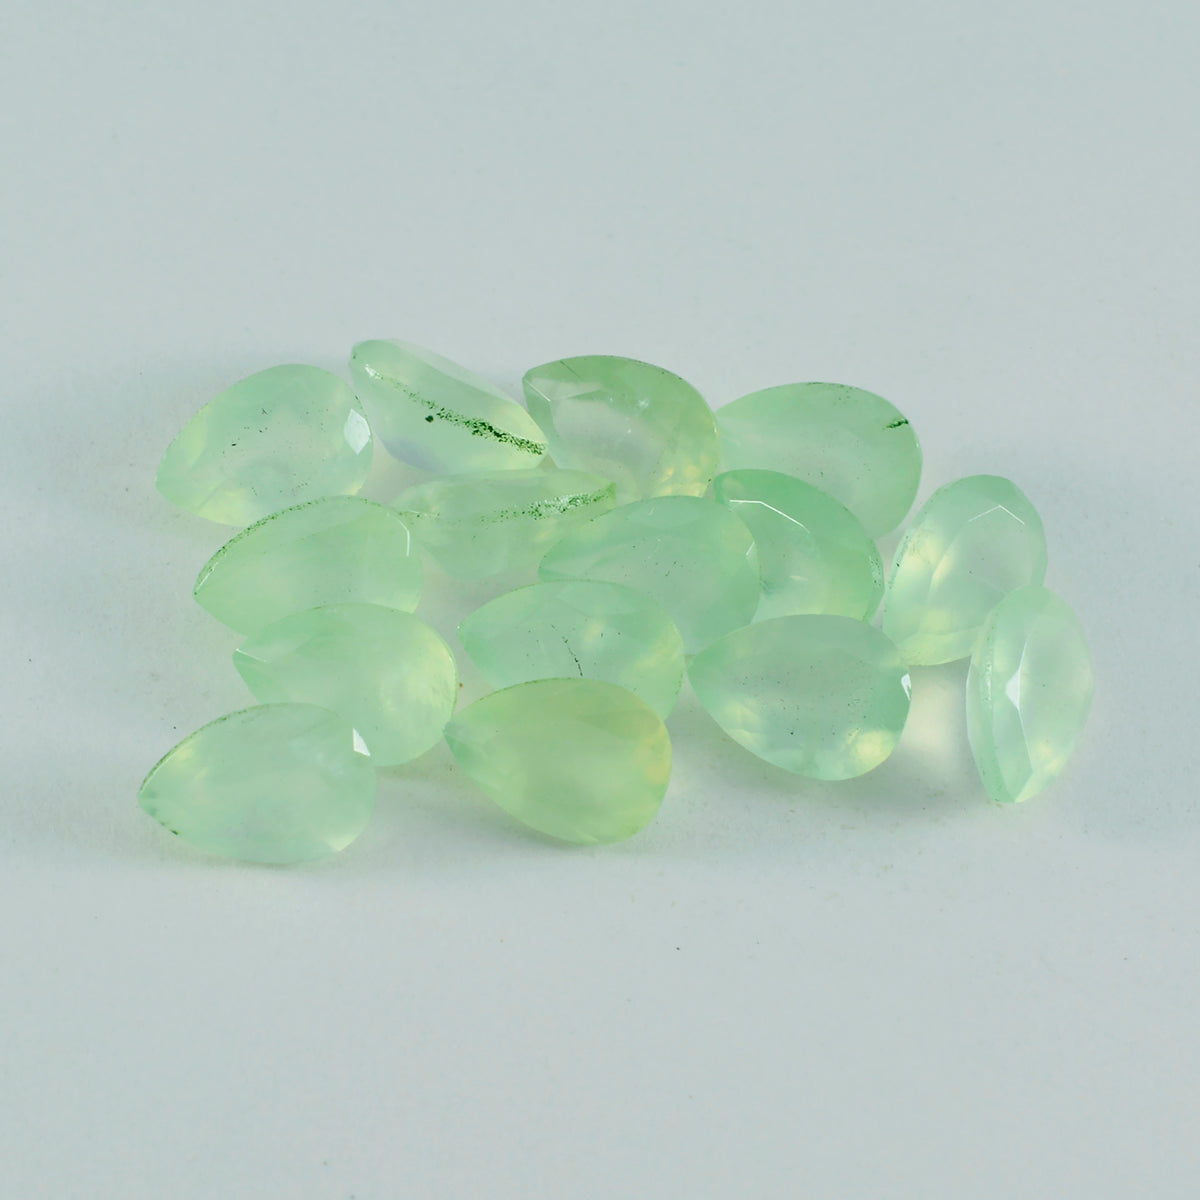 Riyogems 1PC Green Prehnite Faceted 7x10 mm Pear Shape startling Quality Loose Gemstone